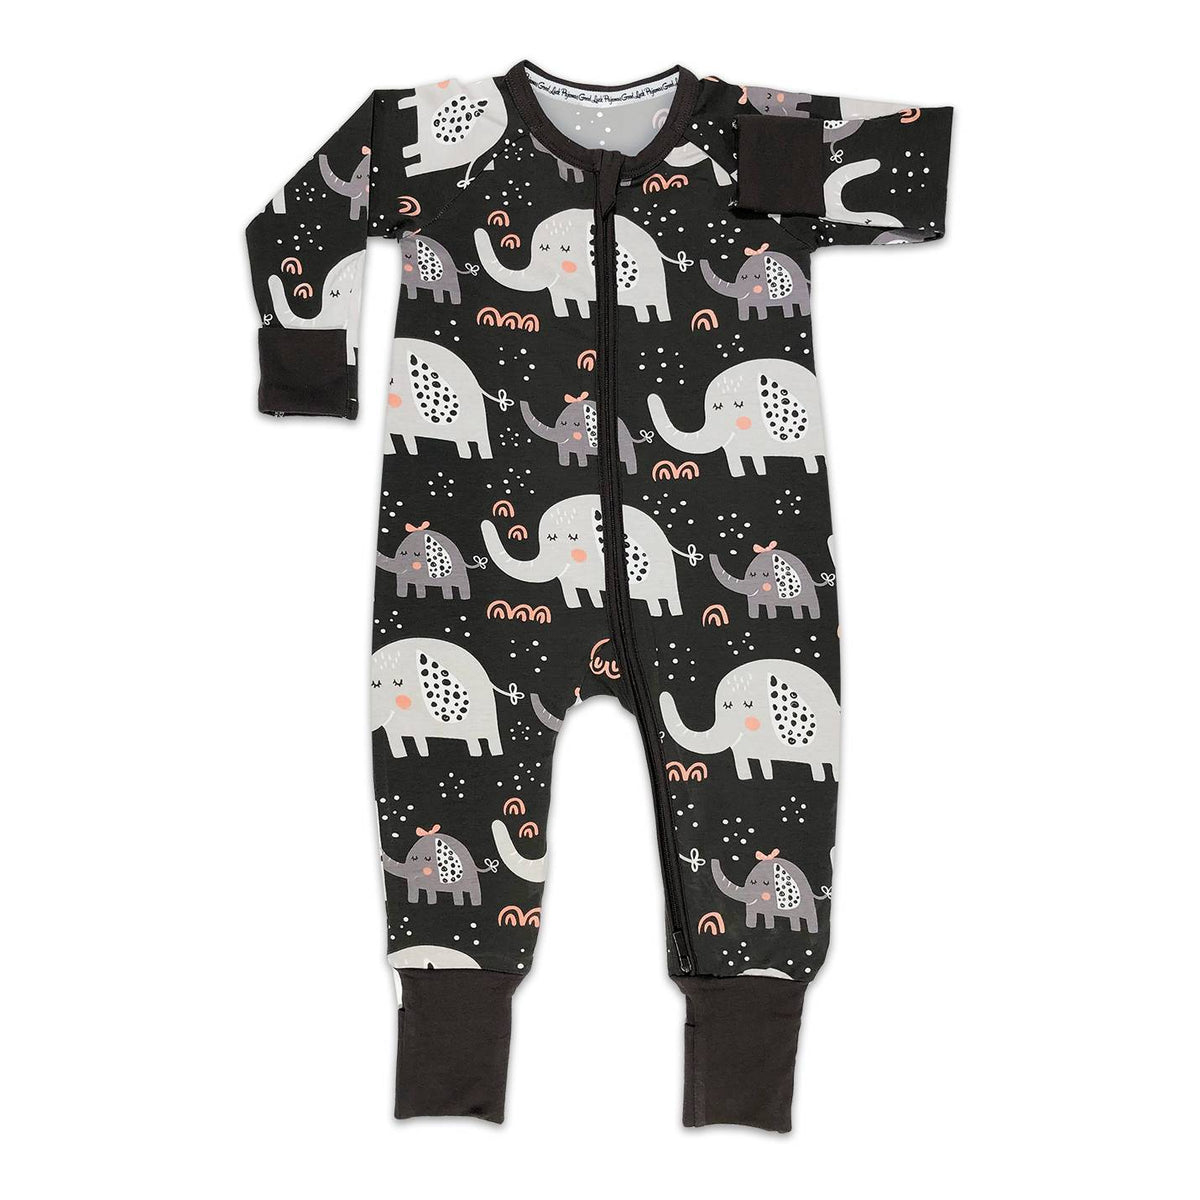 Elephants Baby Pajamas